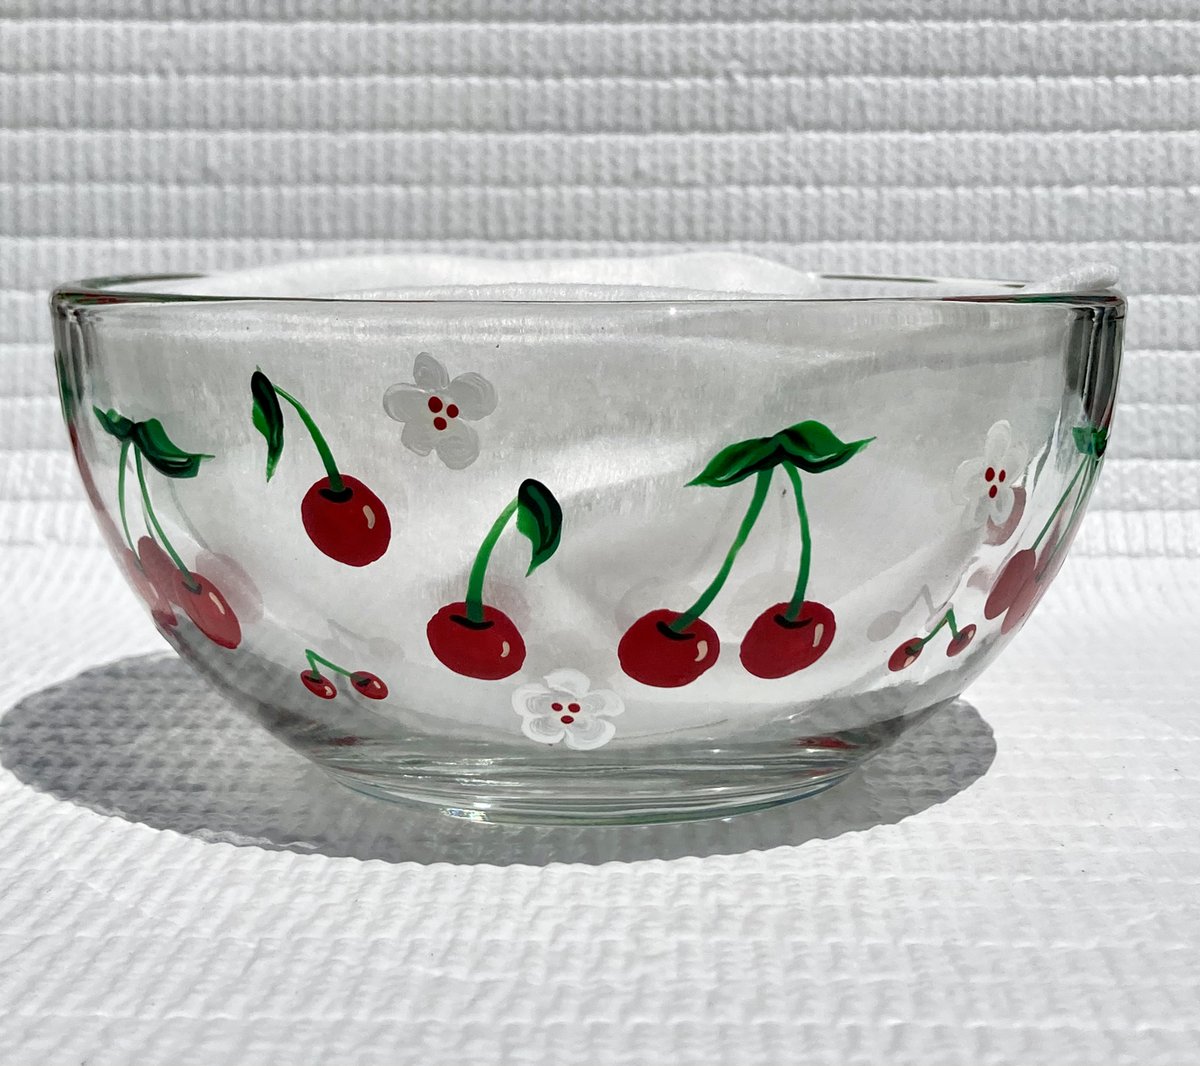 etsy.com/listing/147301… #cherries #cherrybowl #paintedbowl #SMILEtt23 #showergift #cherrydecor #giftsforher #decorativebowl